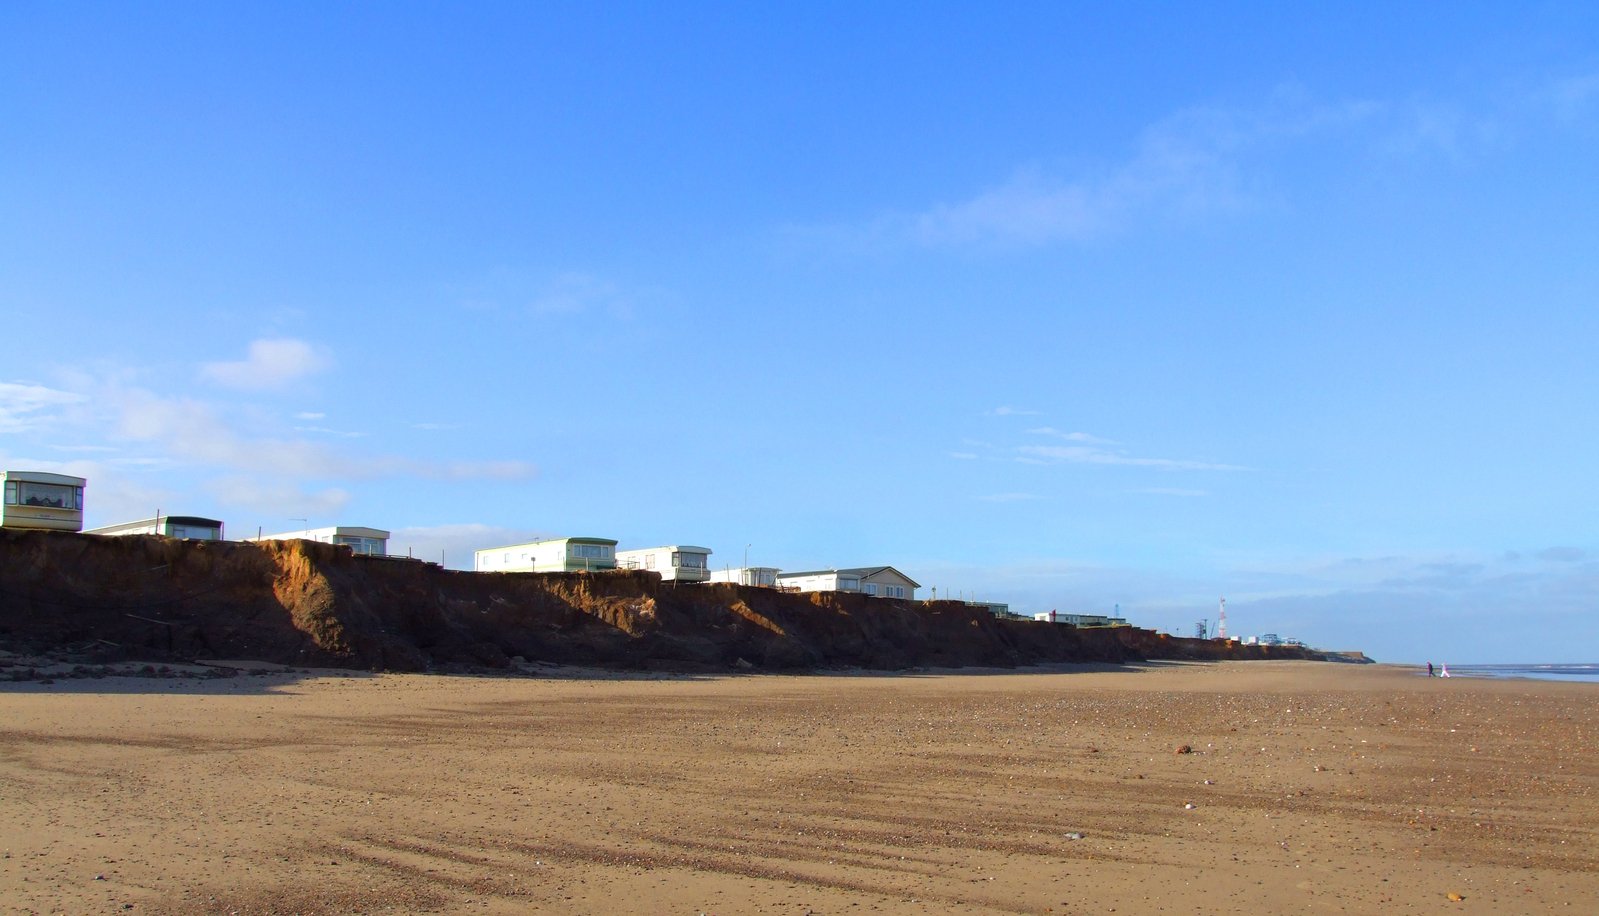 a sandy beach with houses on the hill